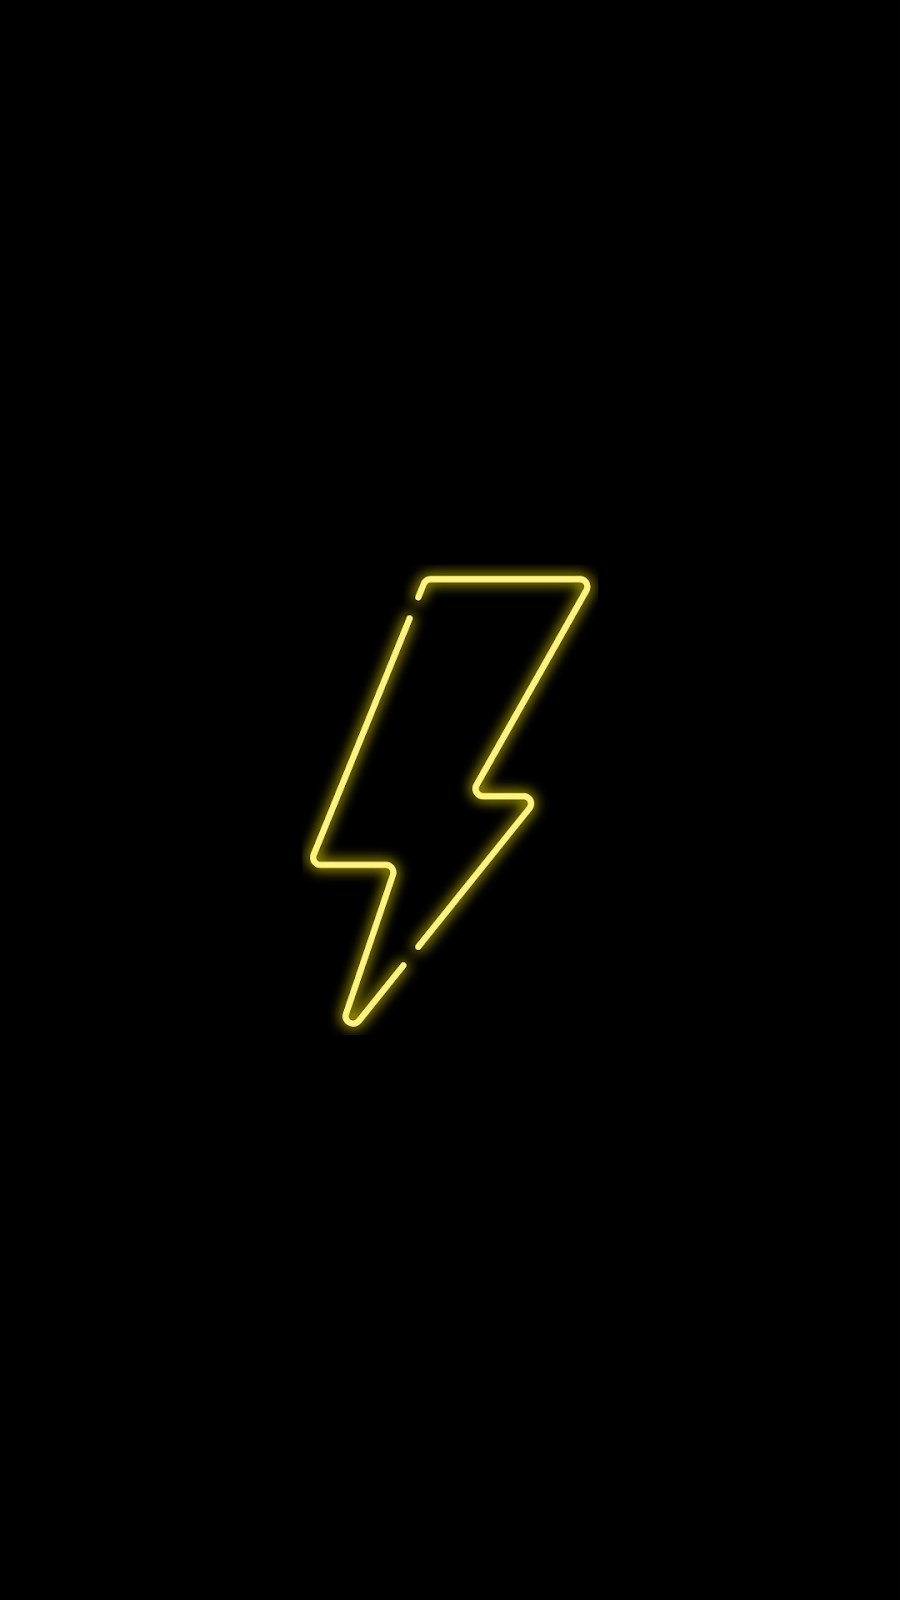 lightning neon wallpaper 1080p amoled